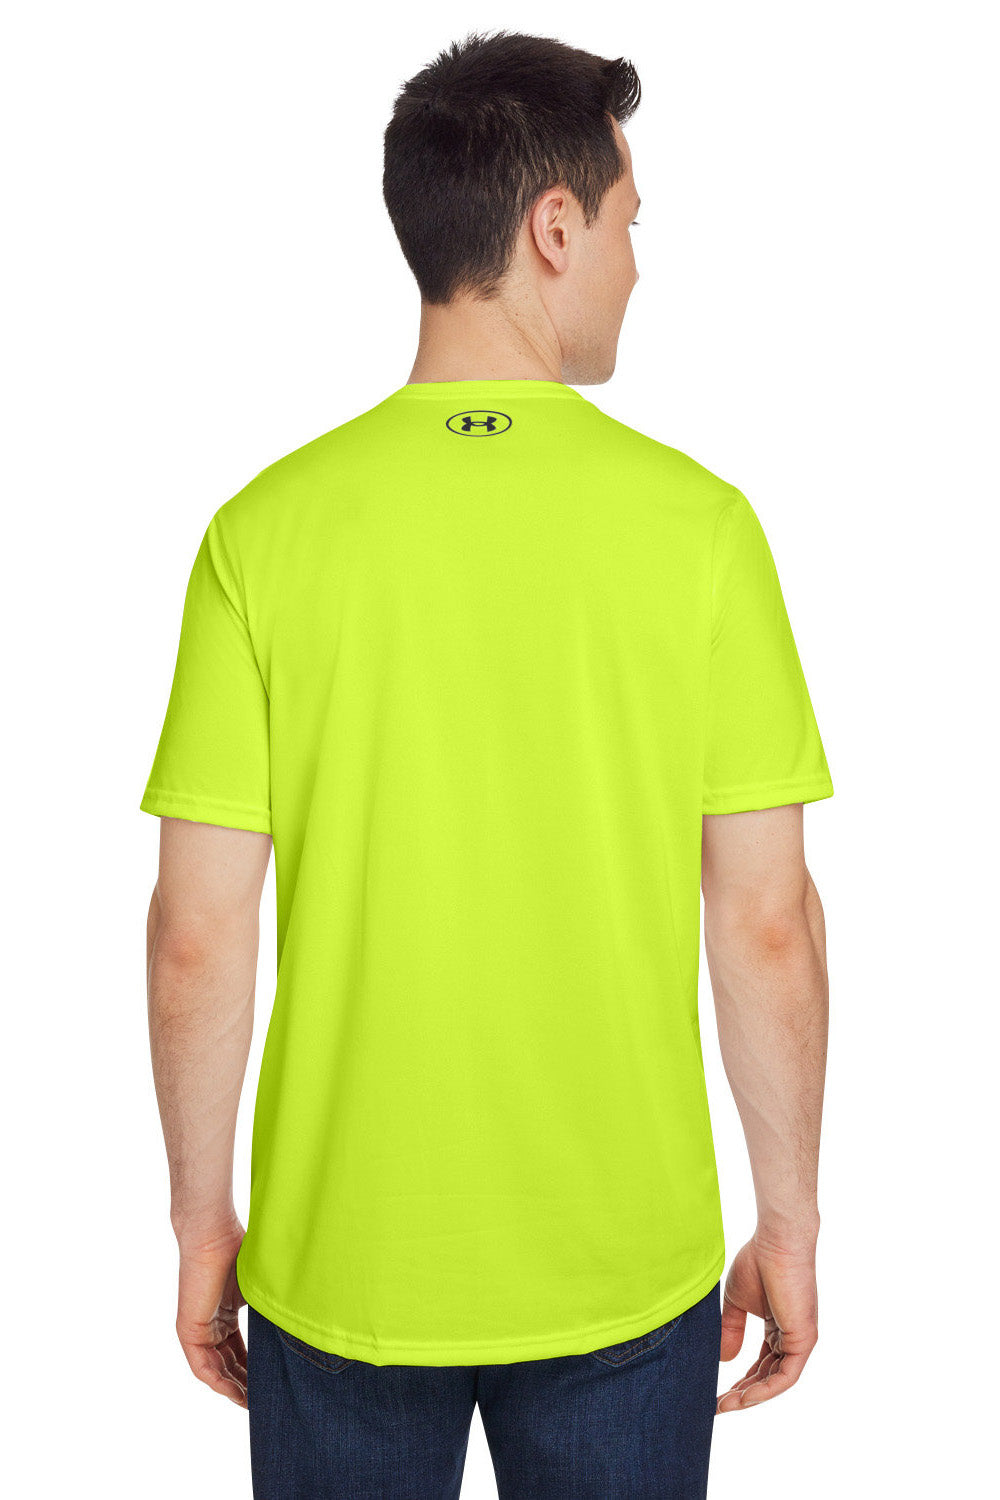 Under Armour 1376842 Mens Team Tech Moisture Wicking Short Sleeve Crewneck T-Shirt Hi Vis Yellow Model Back